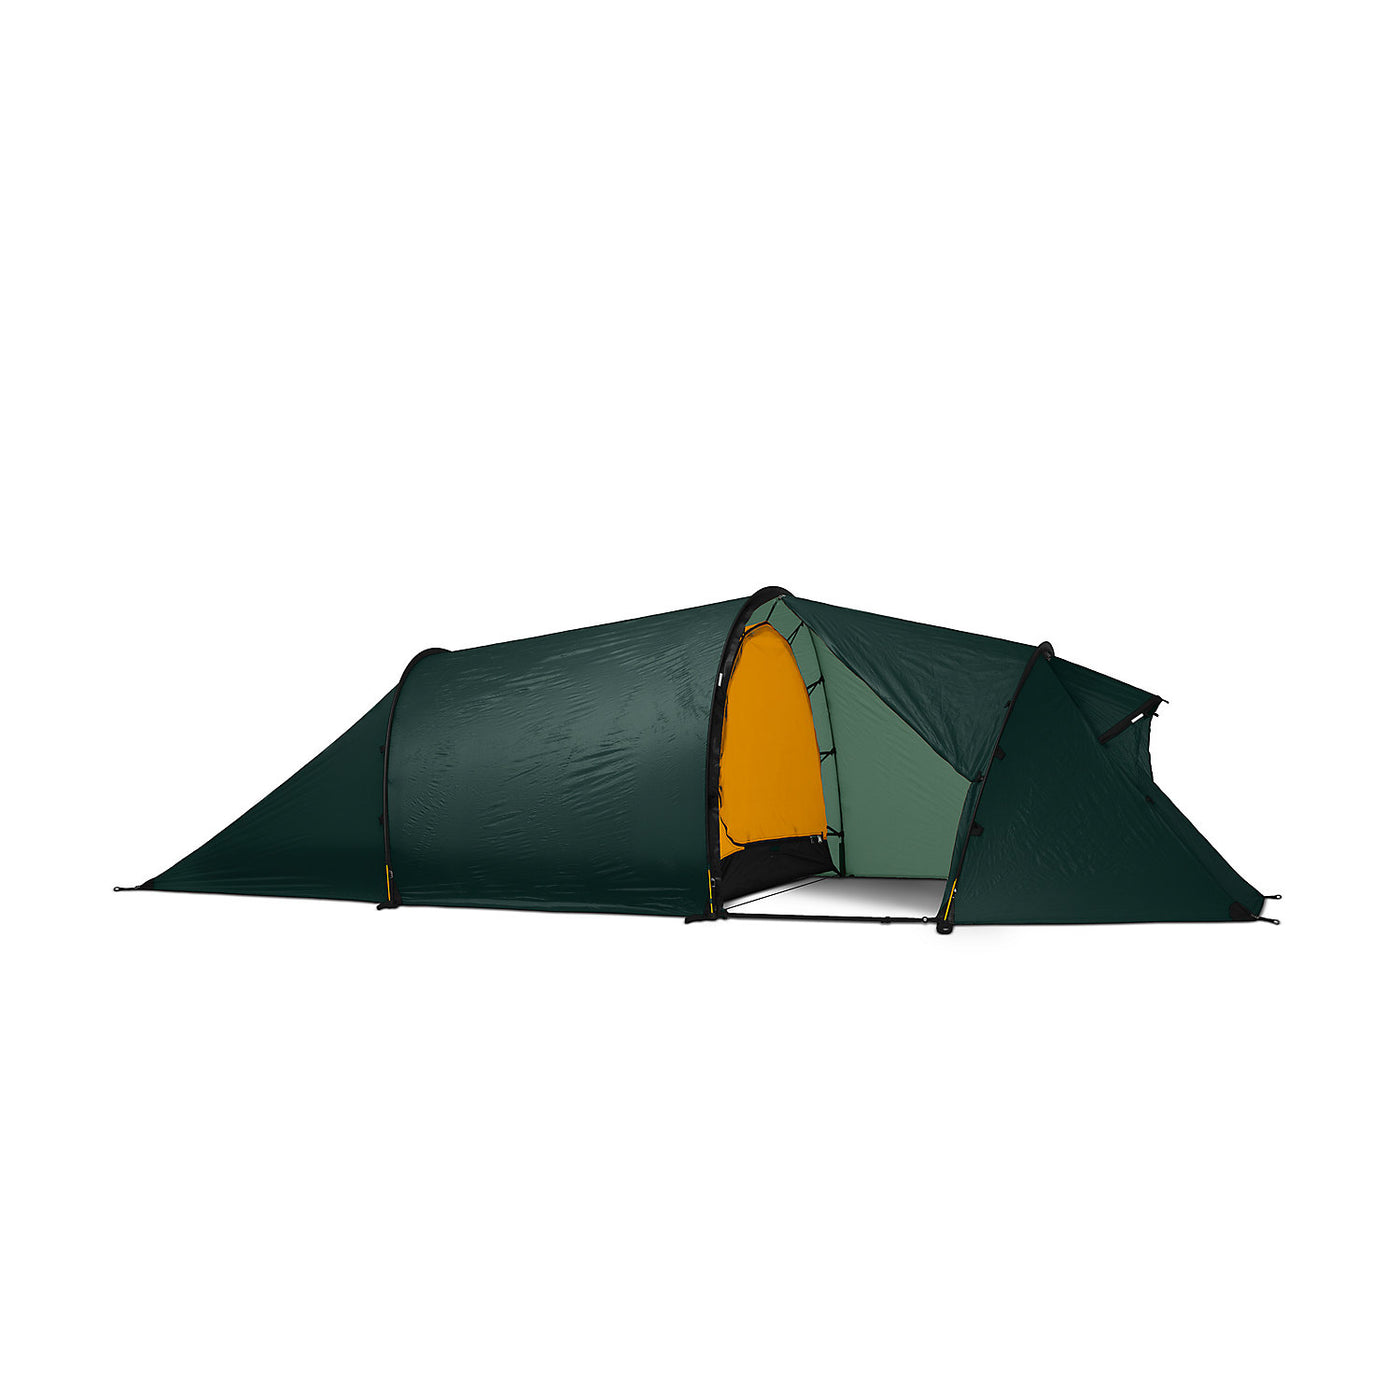 Nallo 4 GT Tent